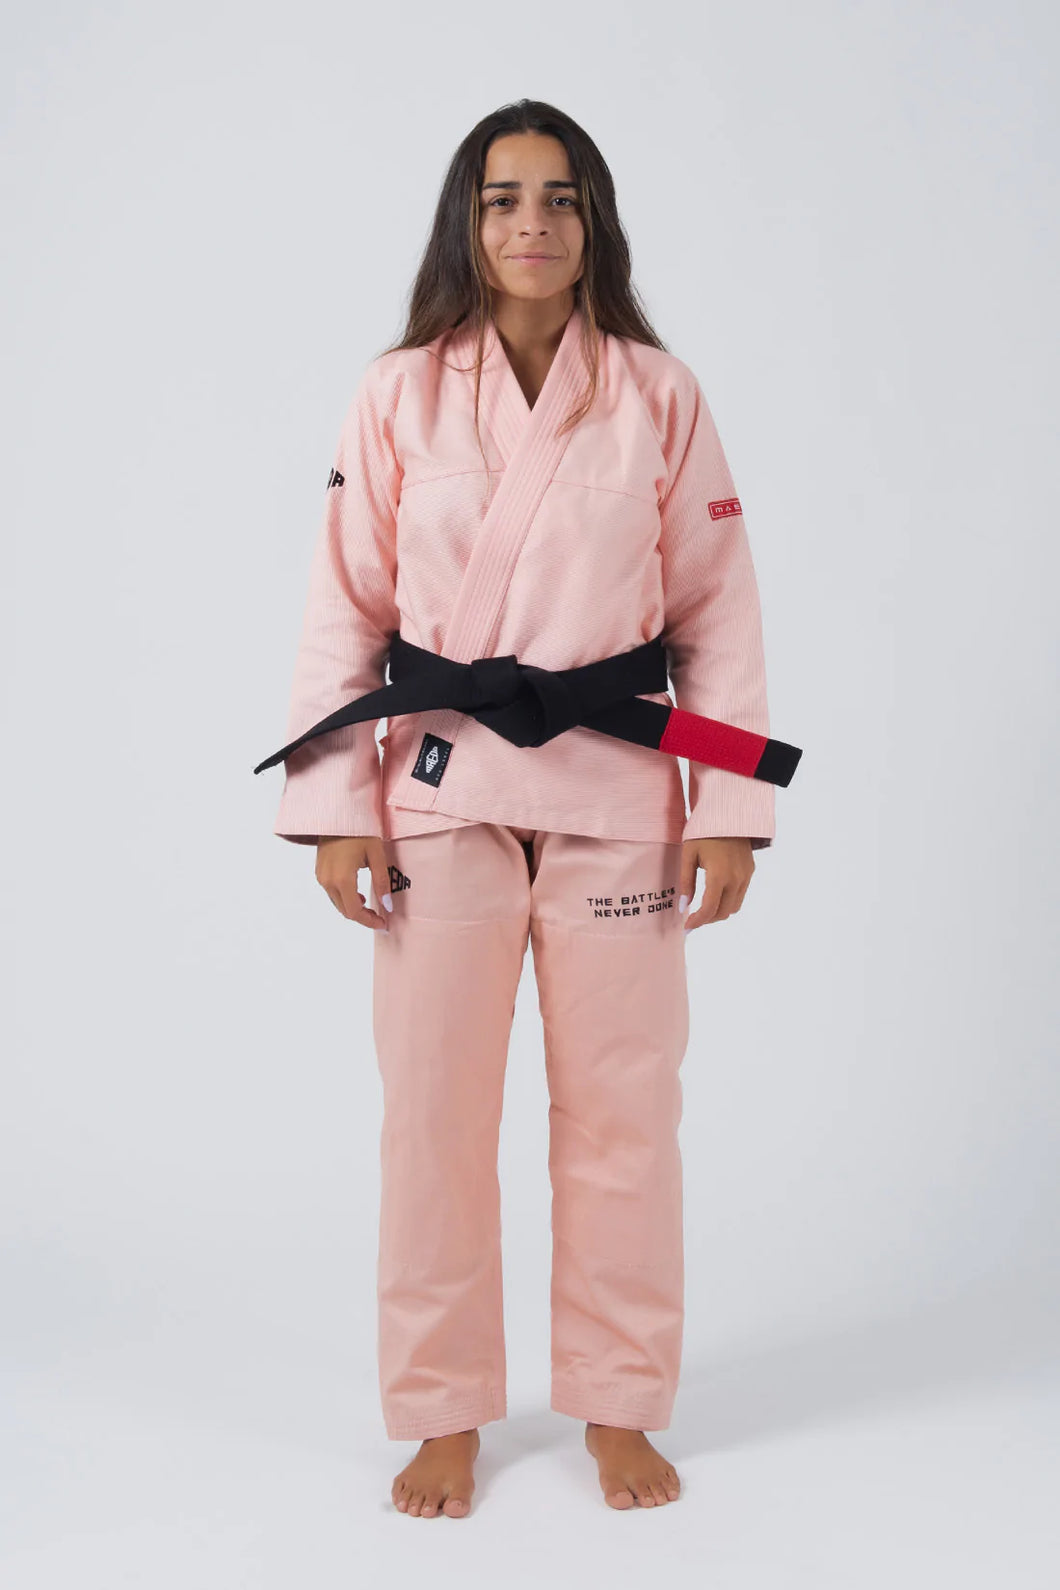 Kimono BJJ (GI) Maeda Red Label 3.0 Peach for Women - White belt included